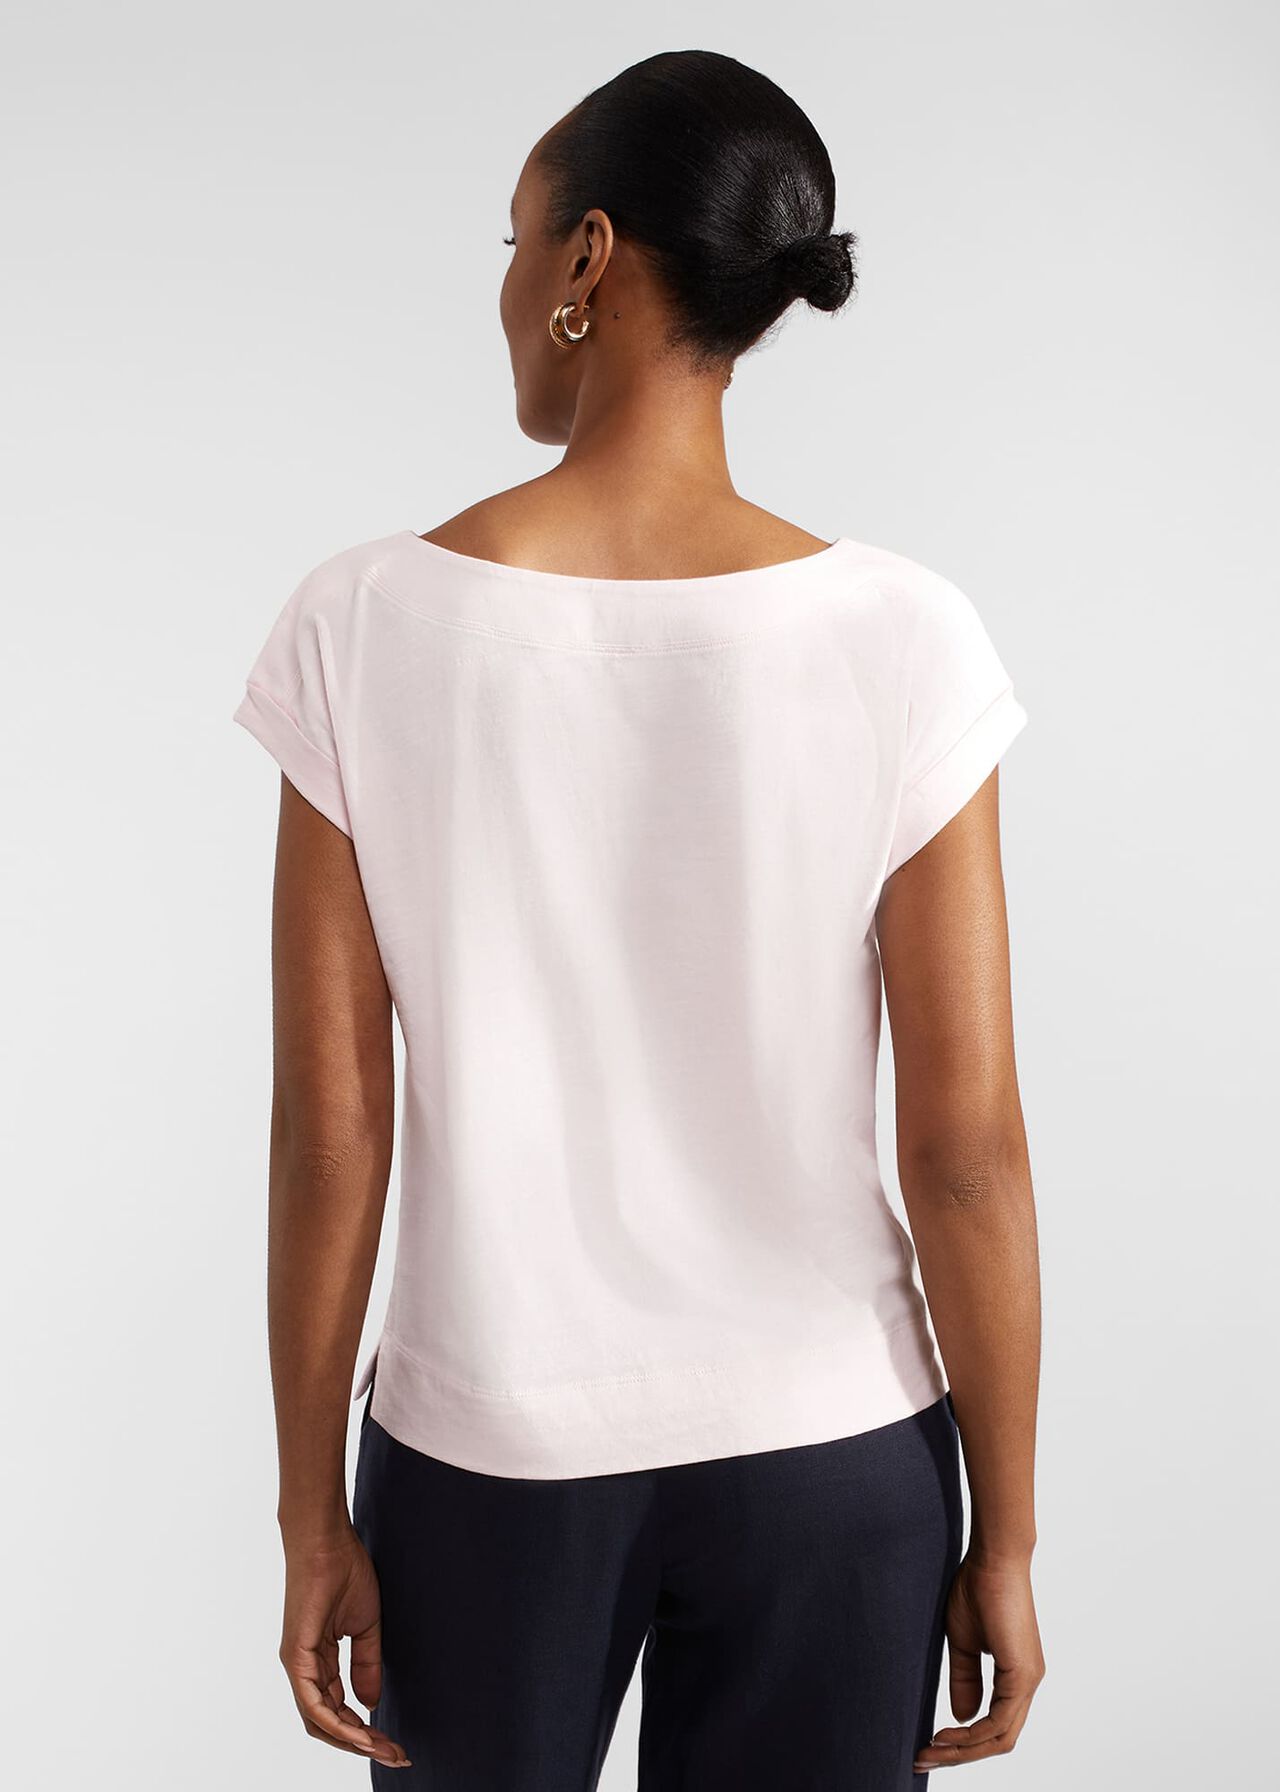 Alycia Cotton Slub T-Shirt, Pale Pink, hi-res